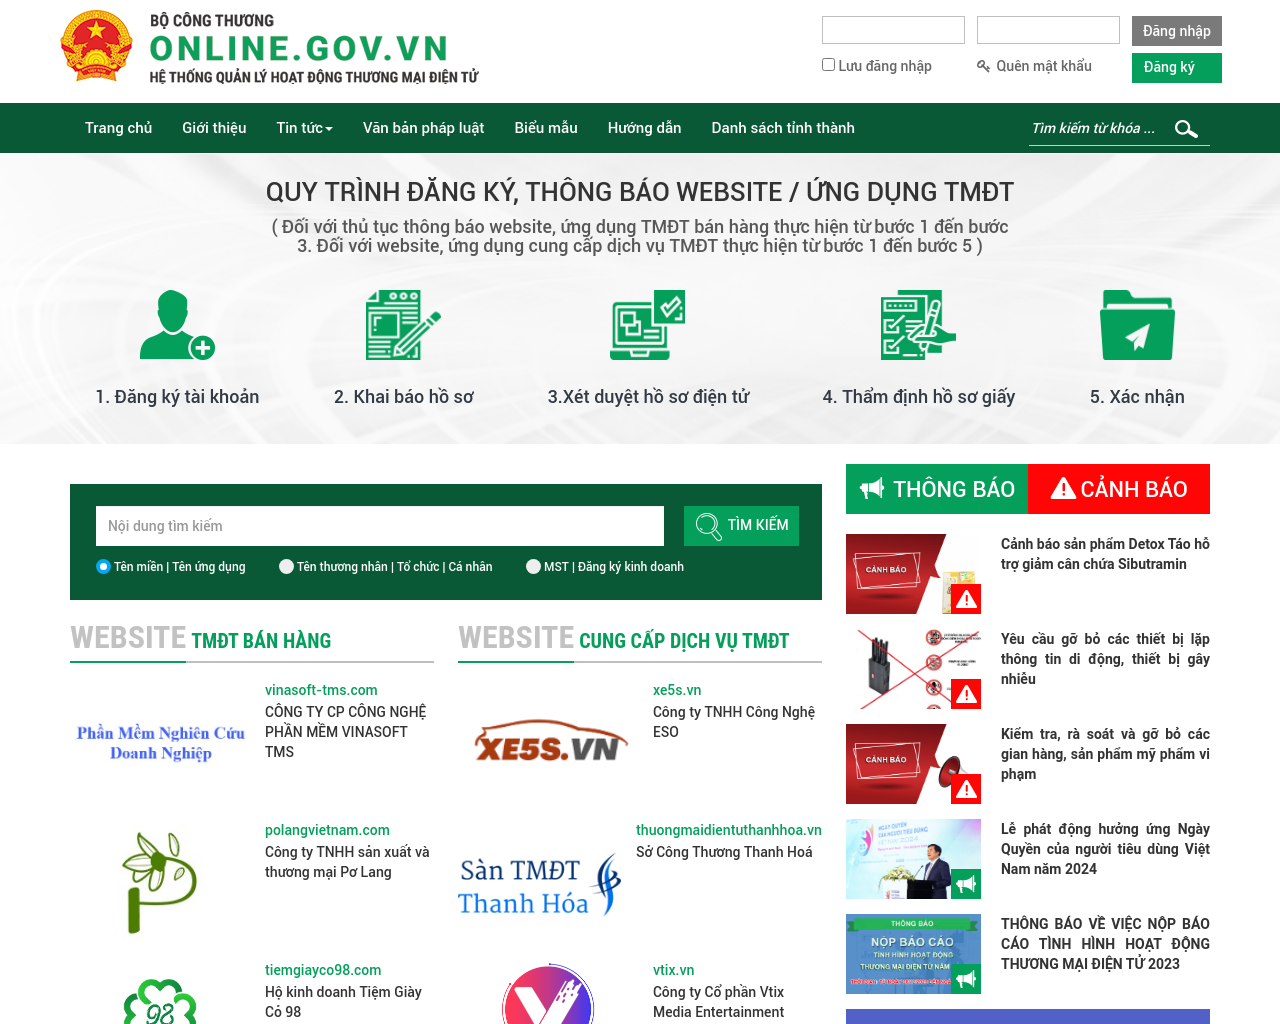 online.gov.vn